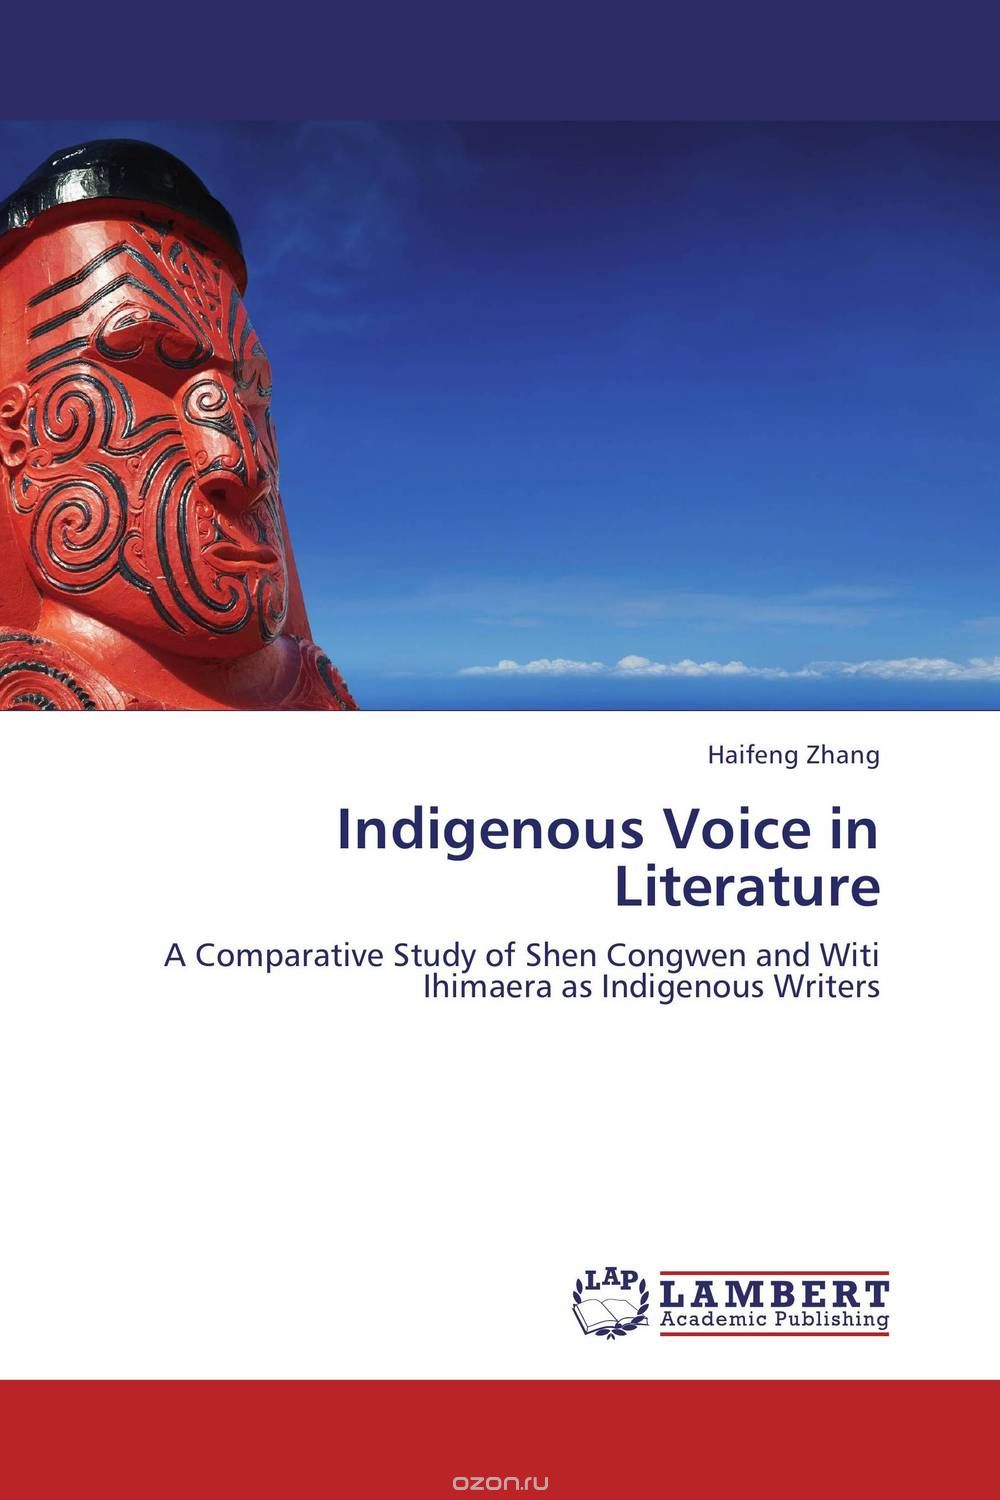 Скачать книгу "Indigenous Voice in Literature"